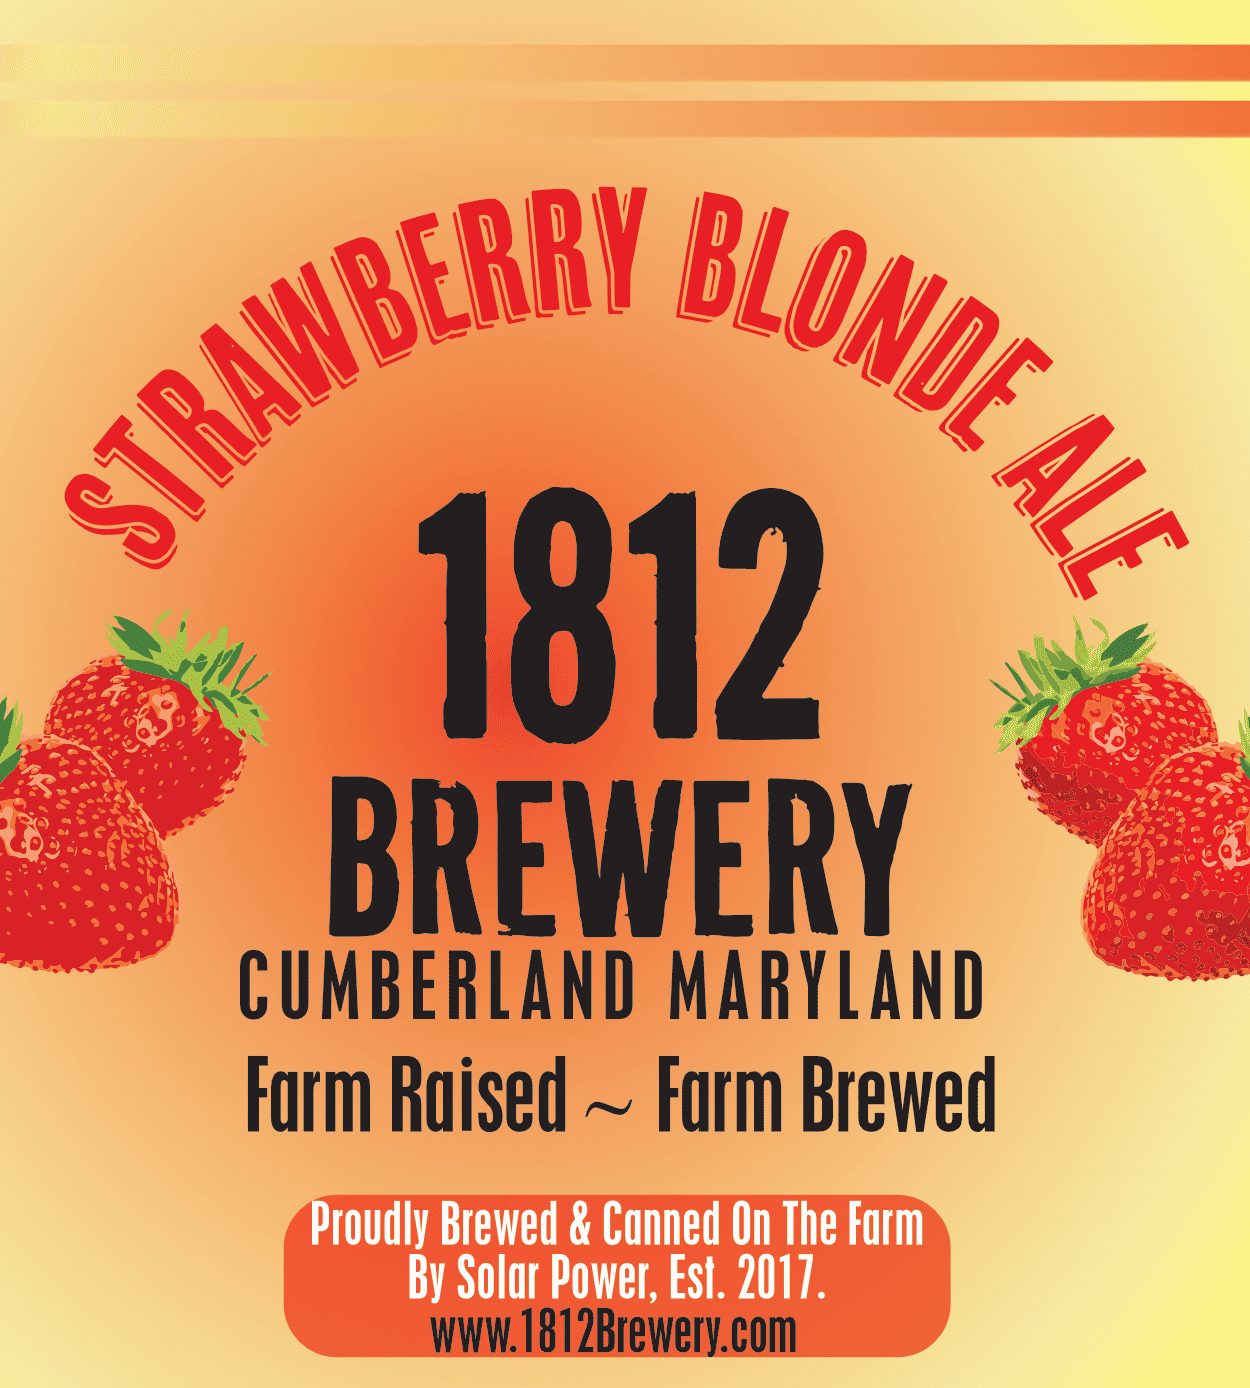 Strawberry Blonde Ale beer label.